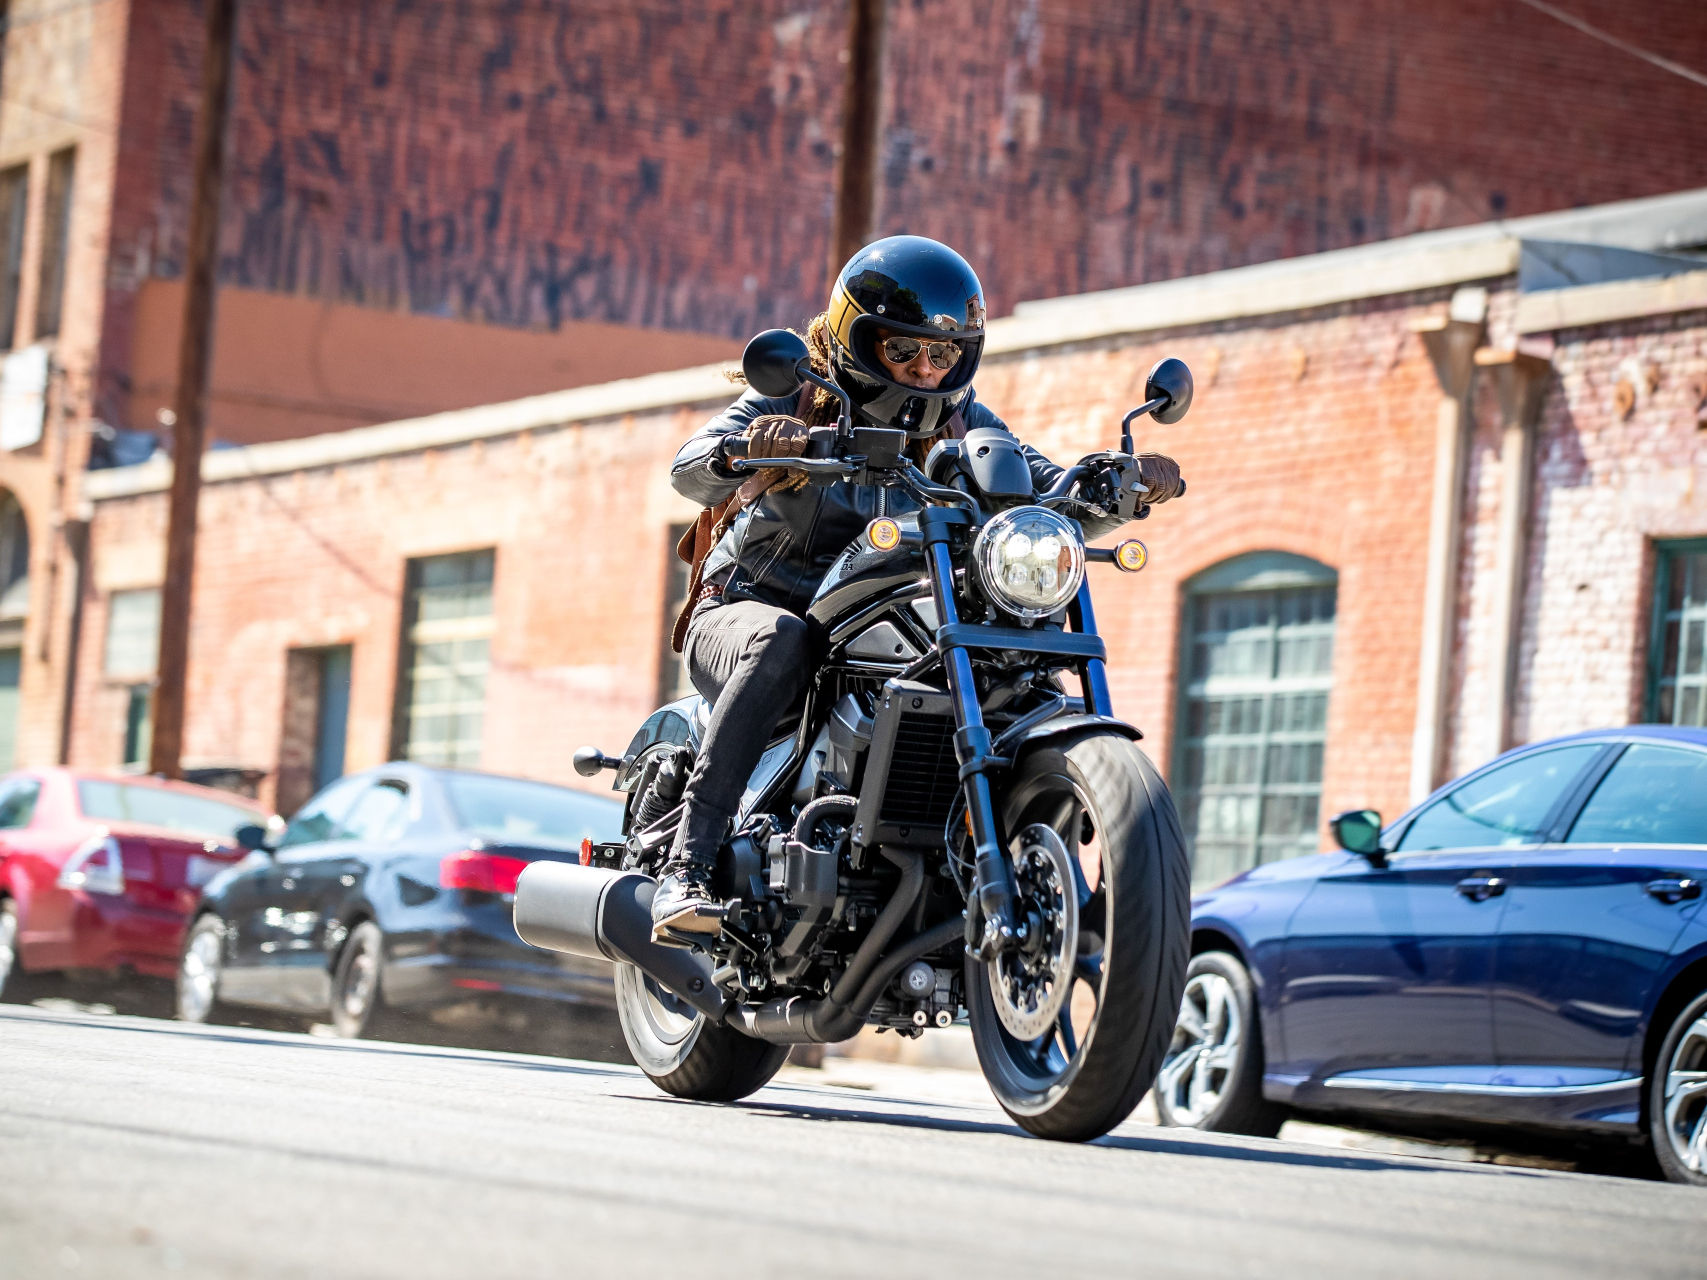 2022 Honda CMX1100 Rebel Revealed Looks Like Harley 